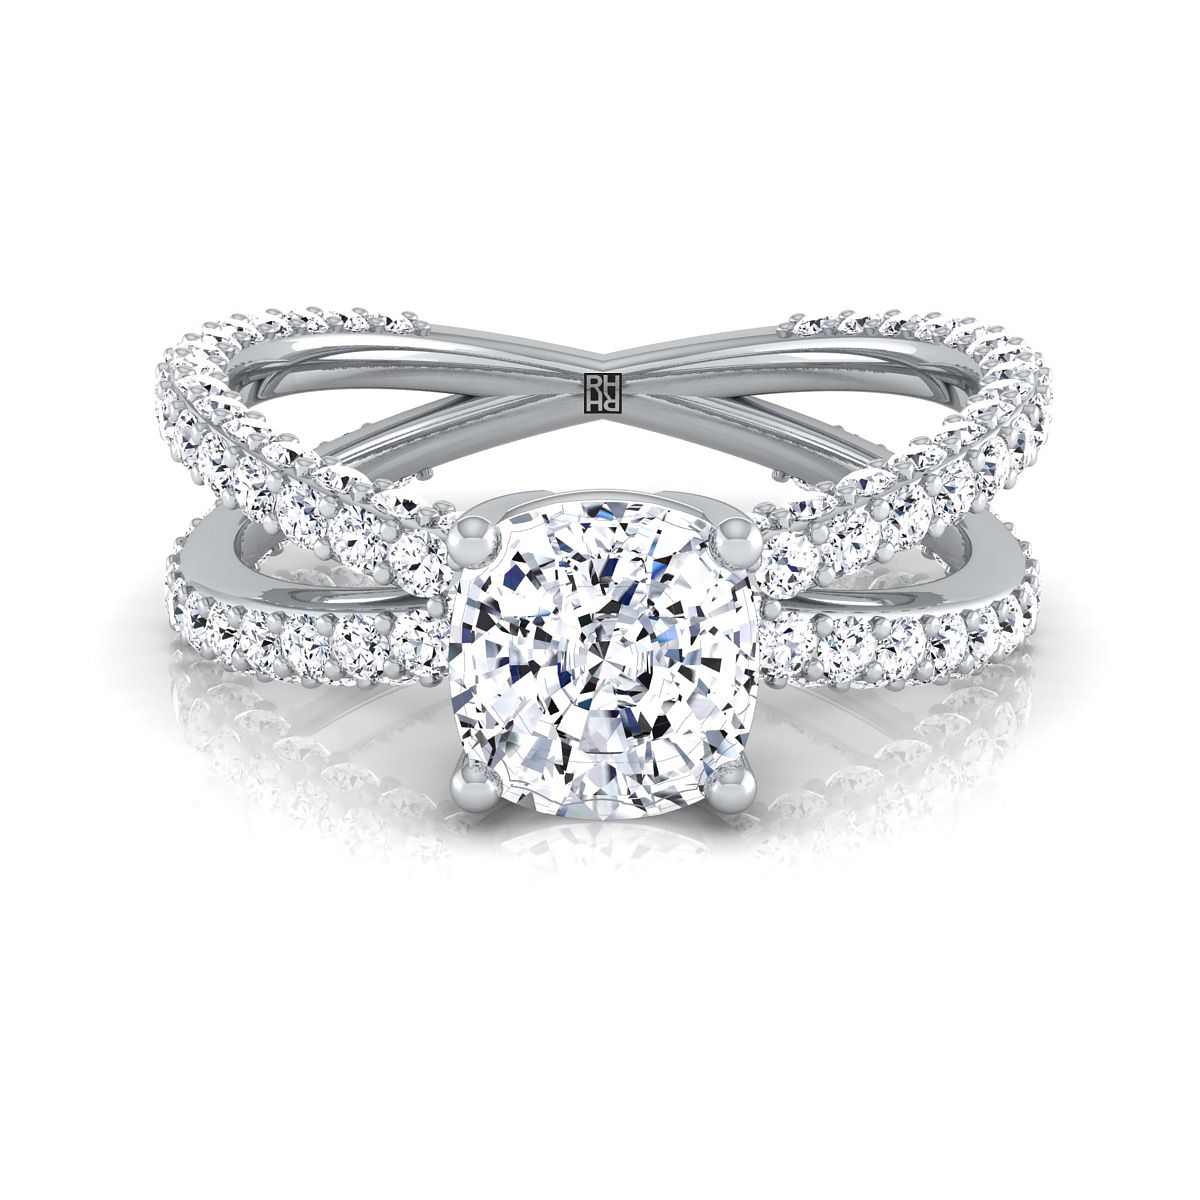 18K White Gold Cushion Open Diamond Pave Criss Cross Engagement Ring -1-1/3ctw